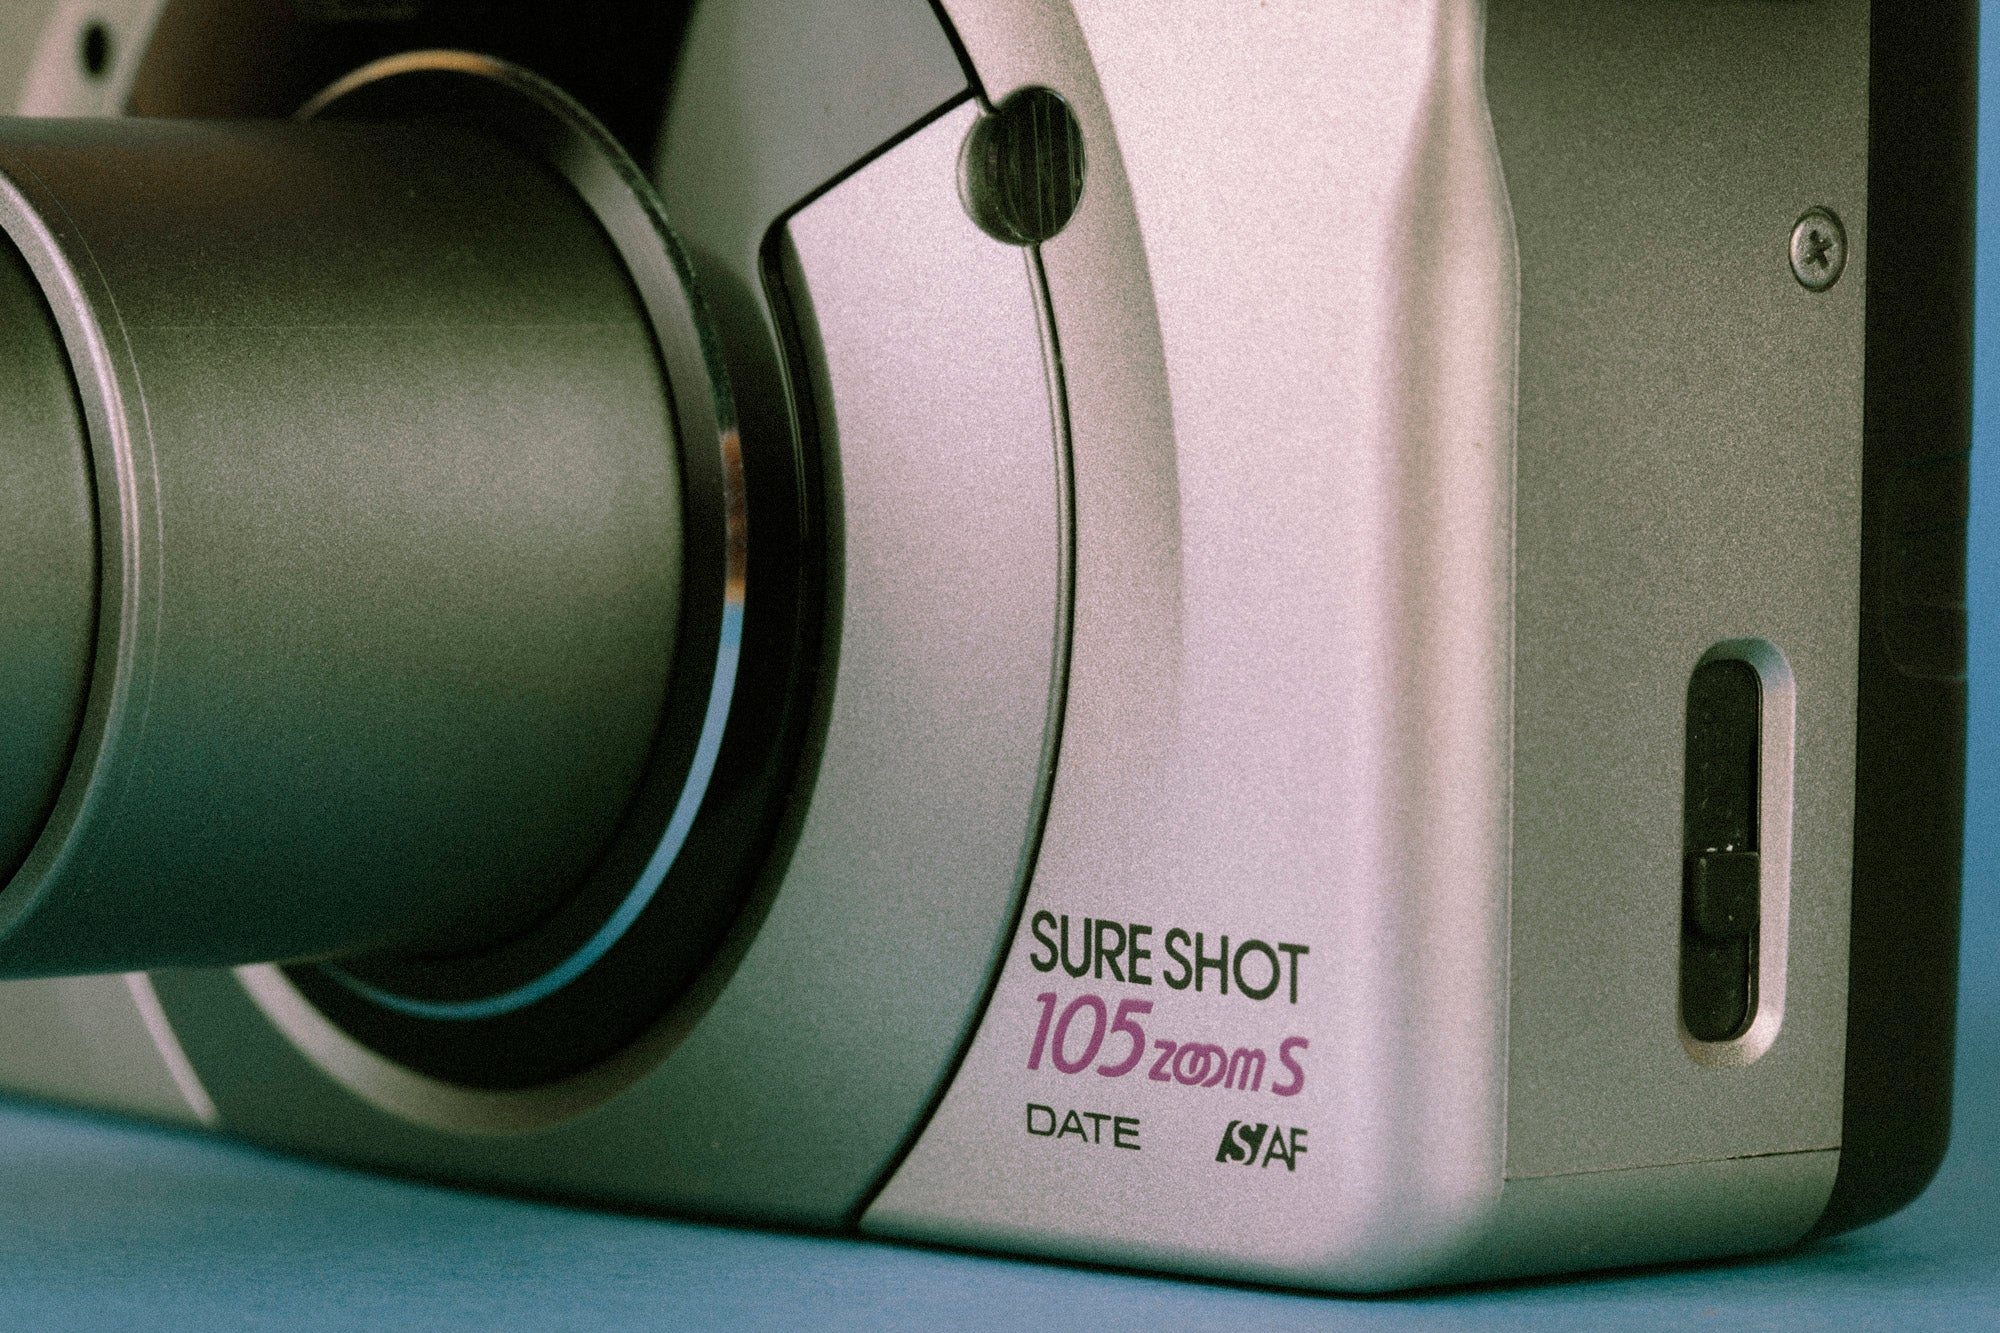 Canon Sure Shot 105 Zoom S